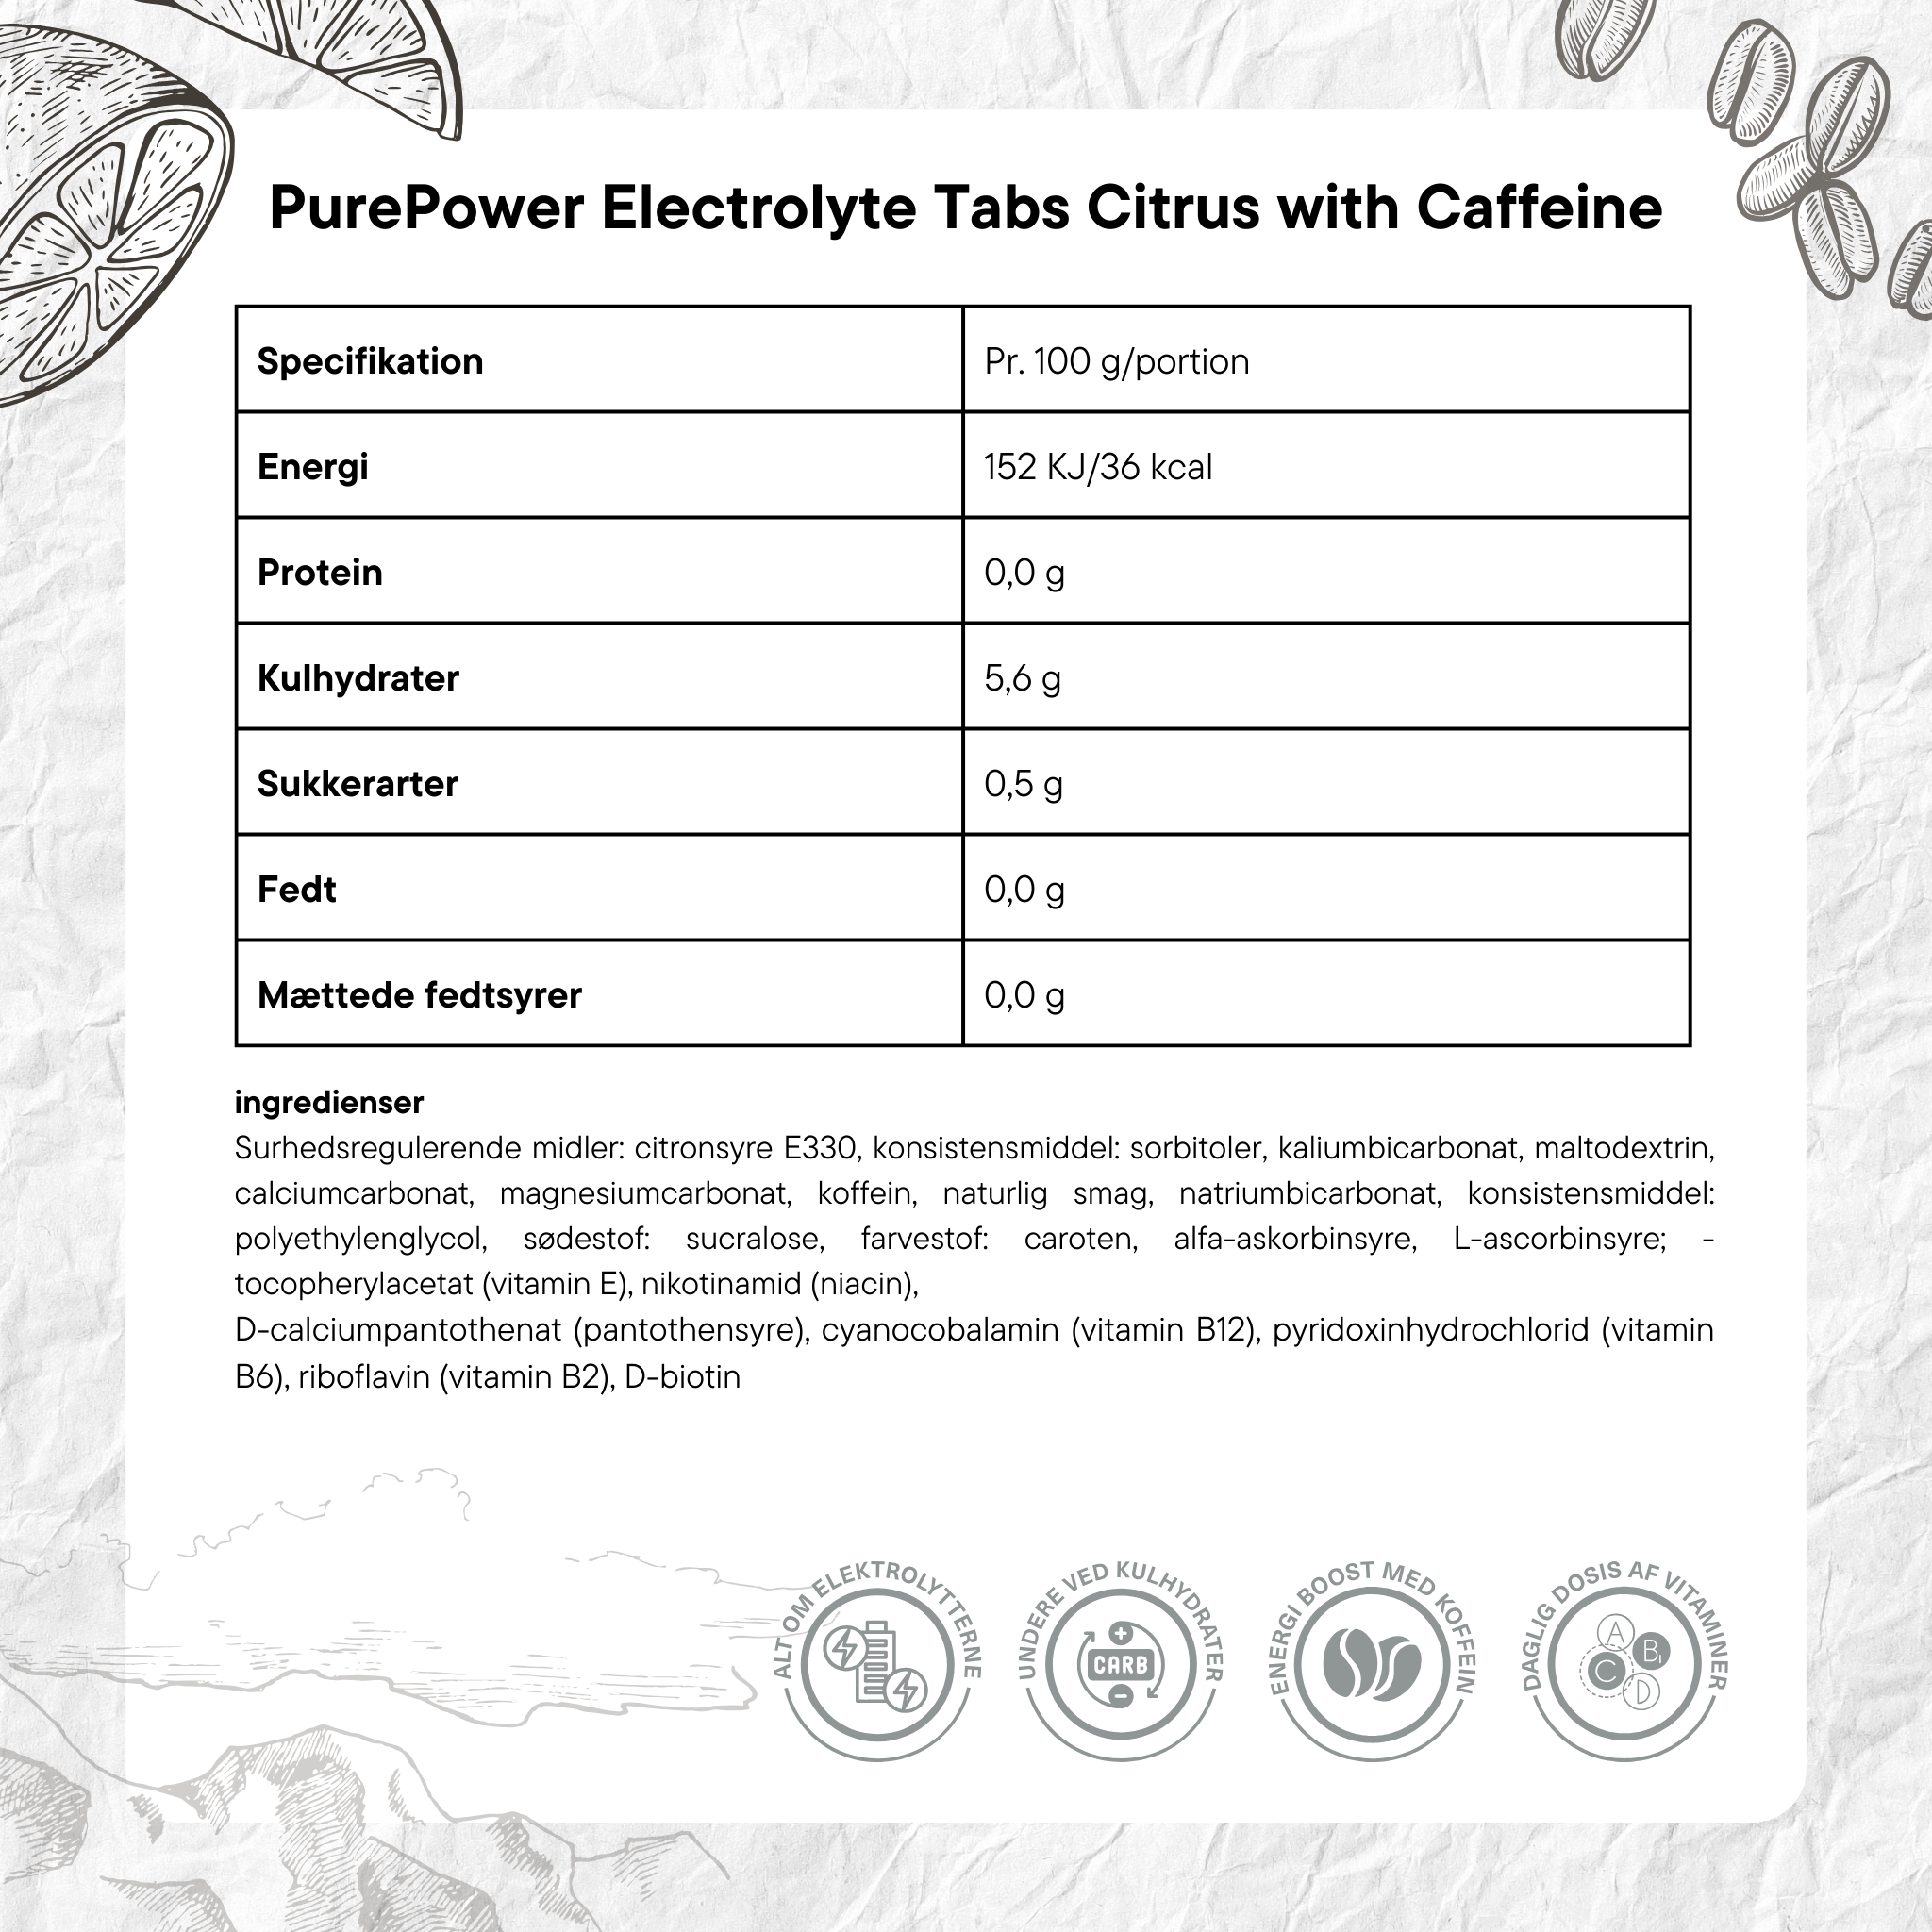 PurePower Elektrolyttabs Citrus med Koffein (20 tabs)